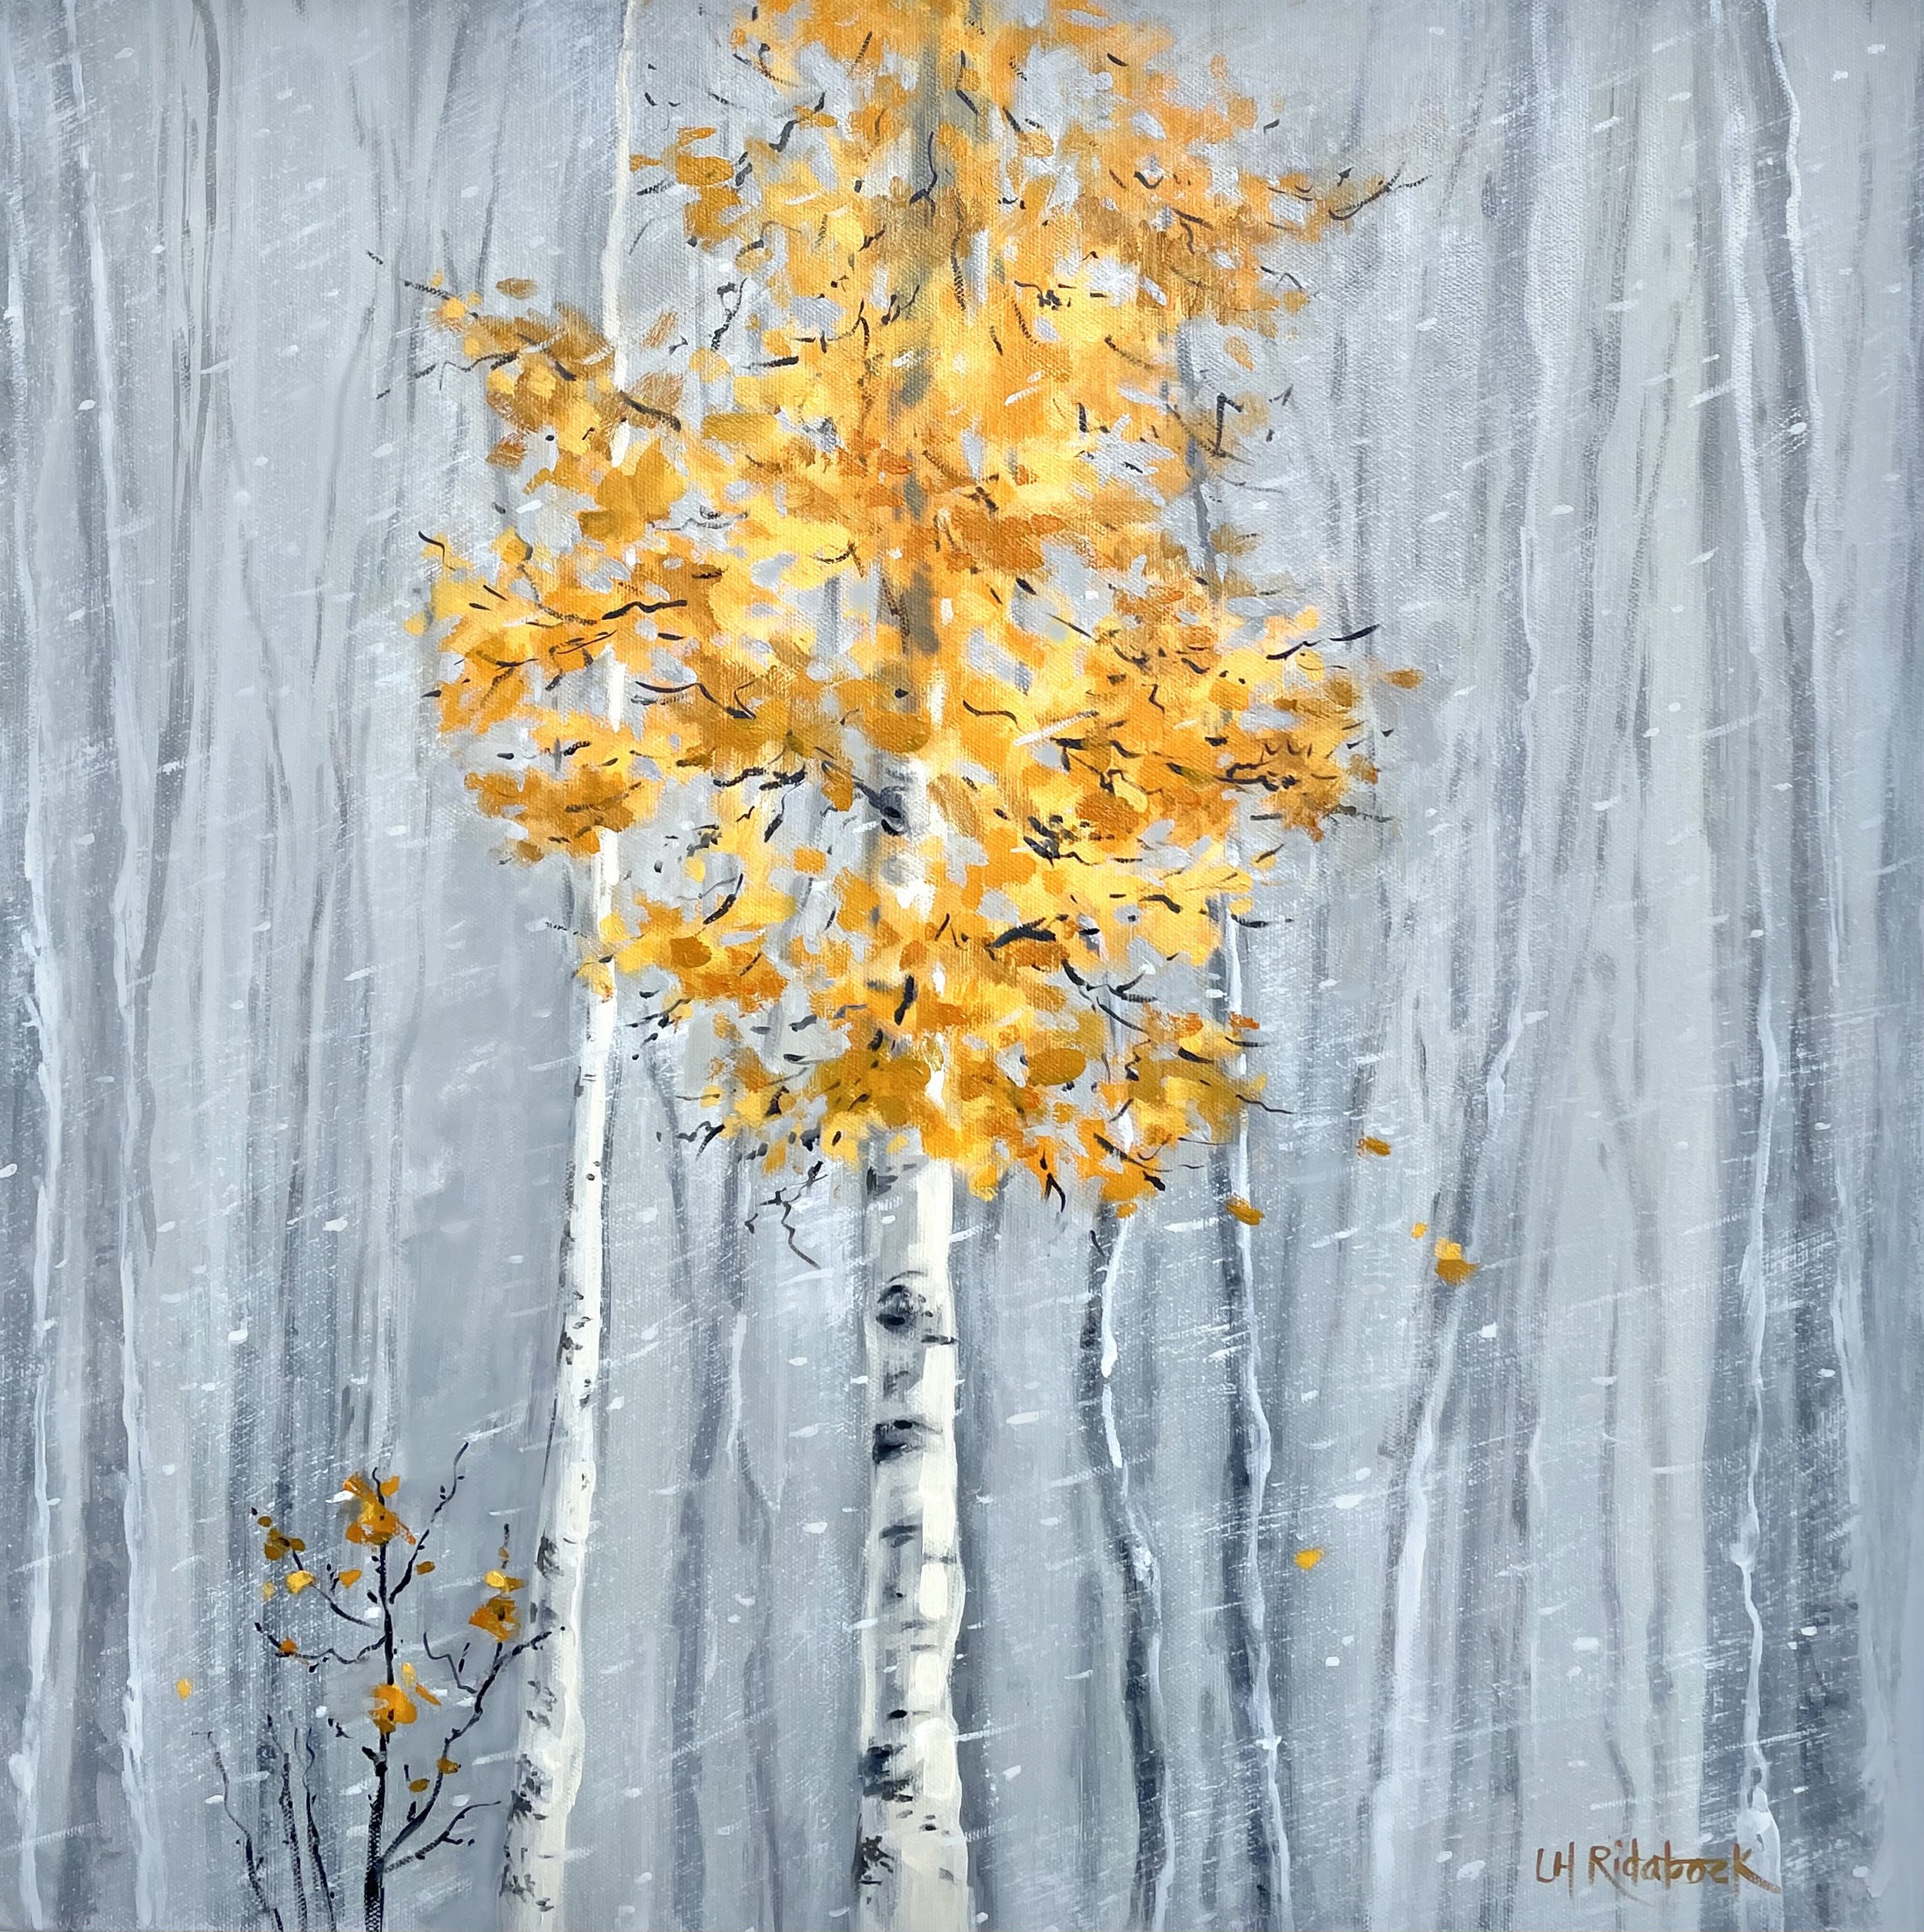 Lisa Ridabock - Birch Snowfall.jpg